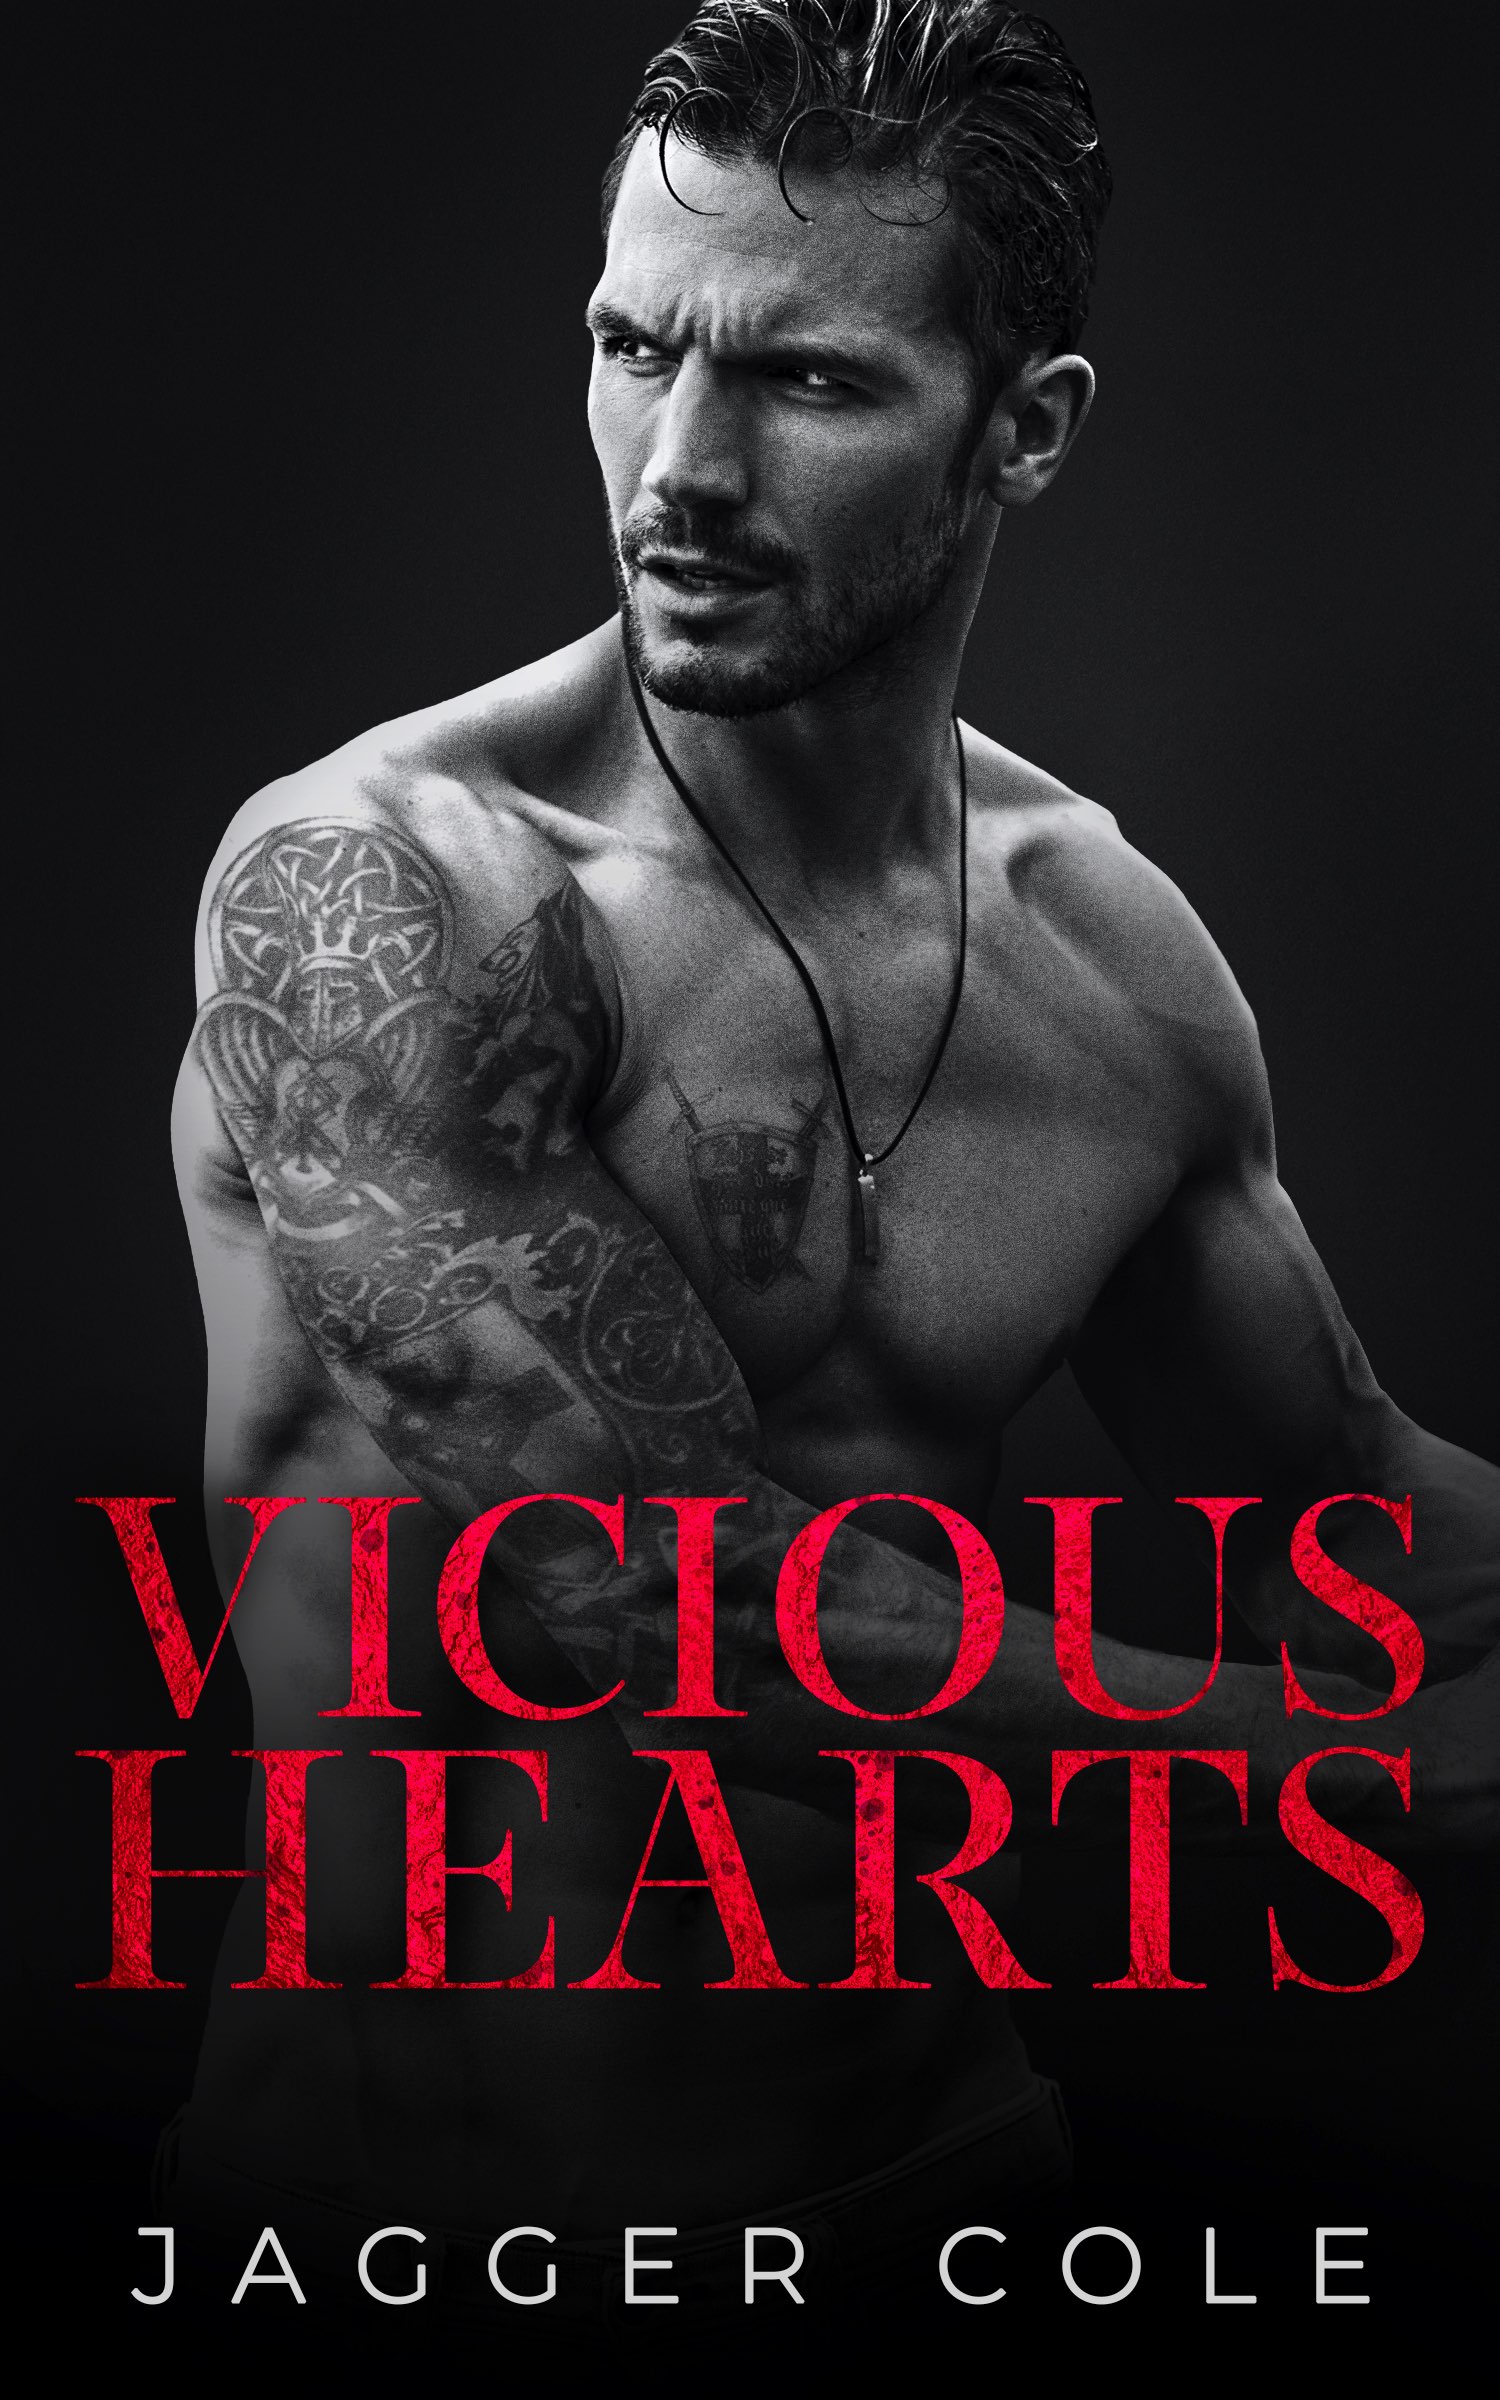 Vicious Hearts